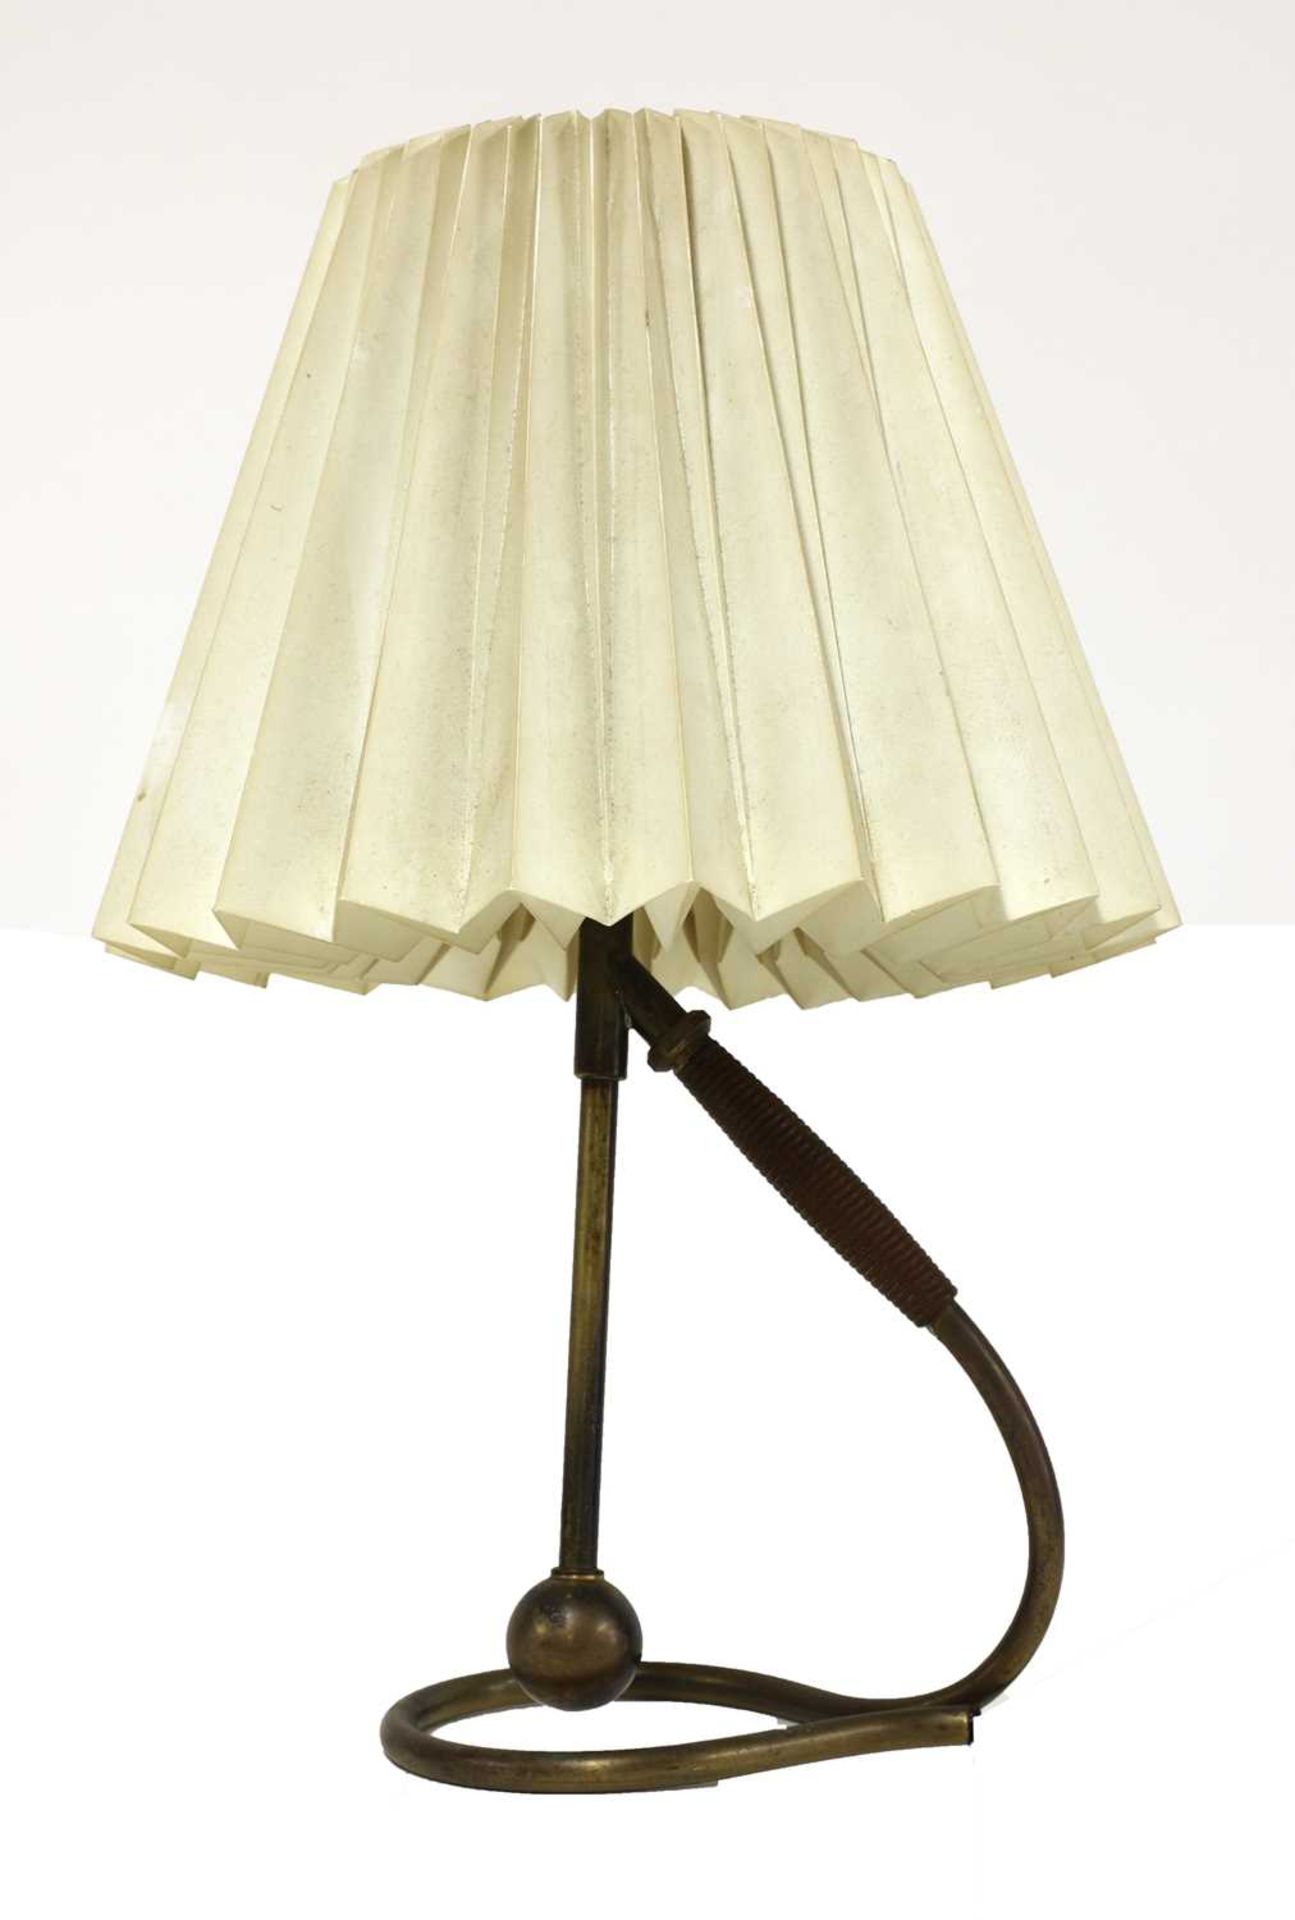 A desk lamp,